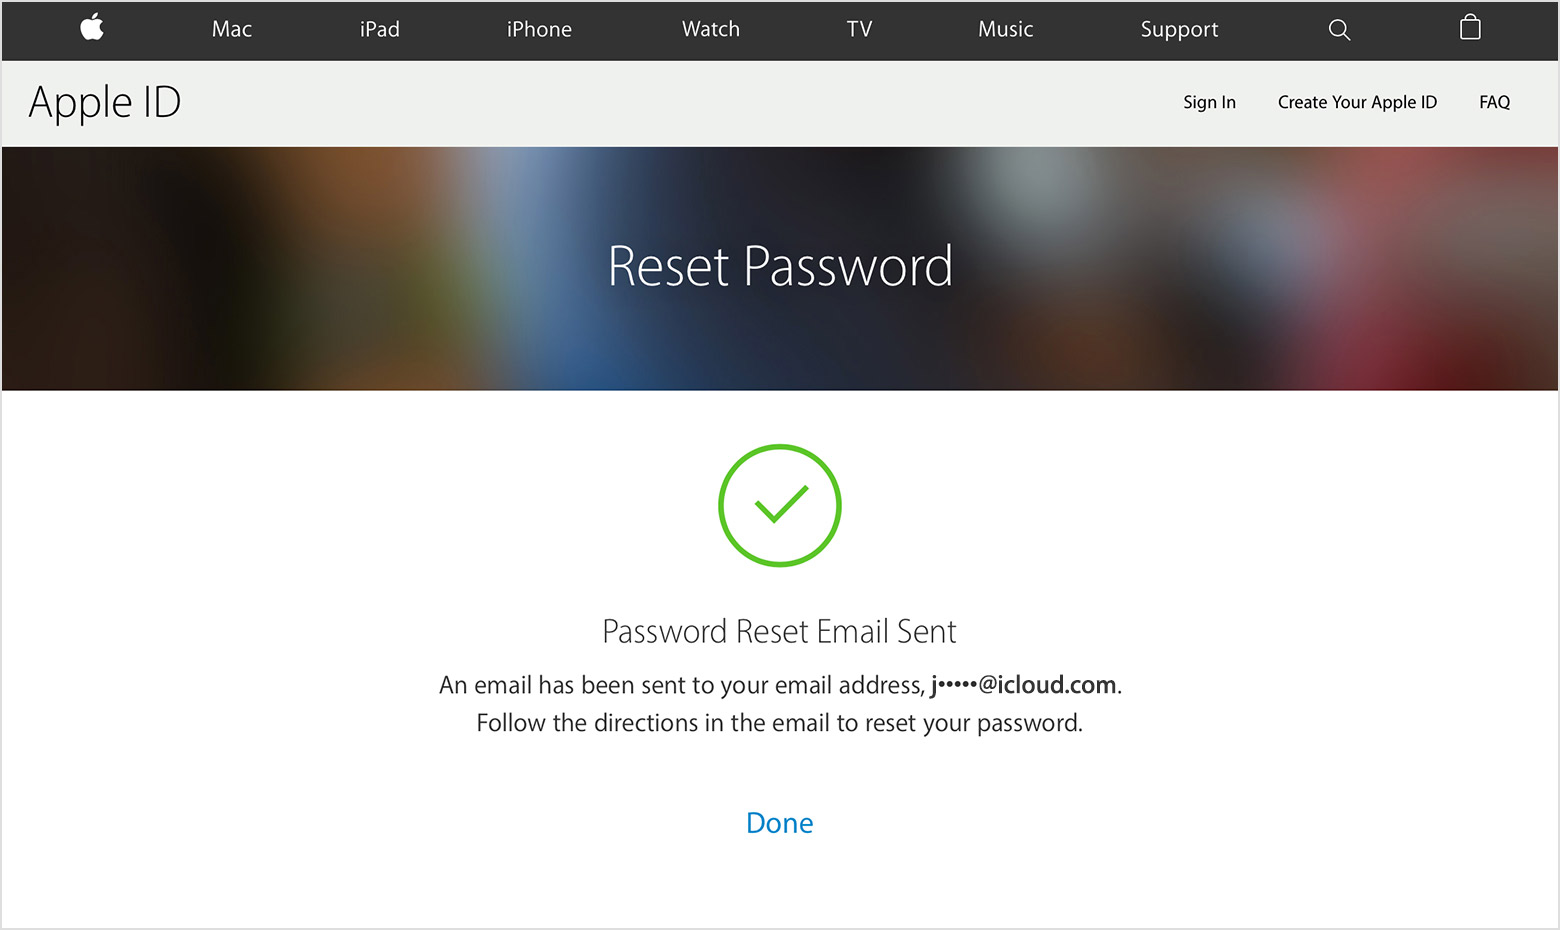 reset apple airport express password